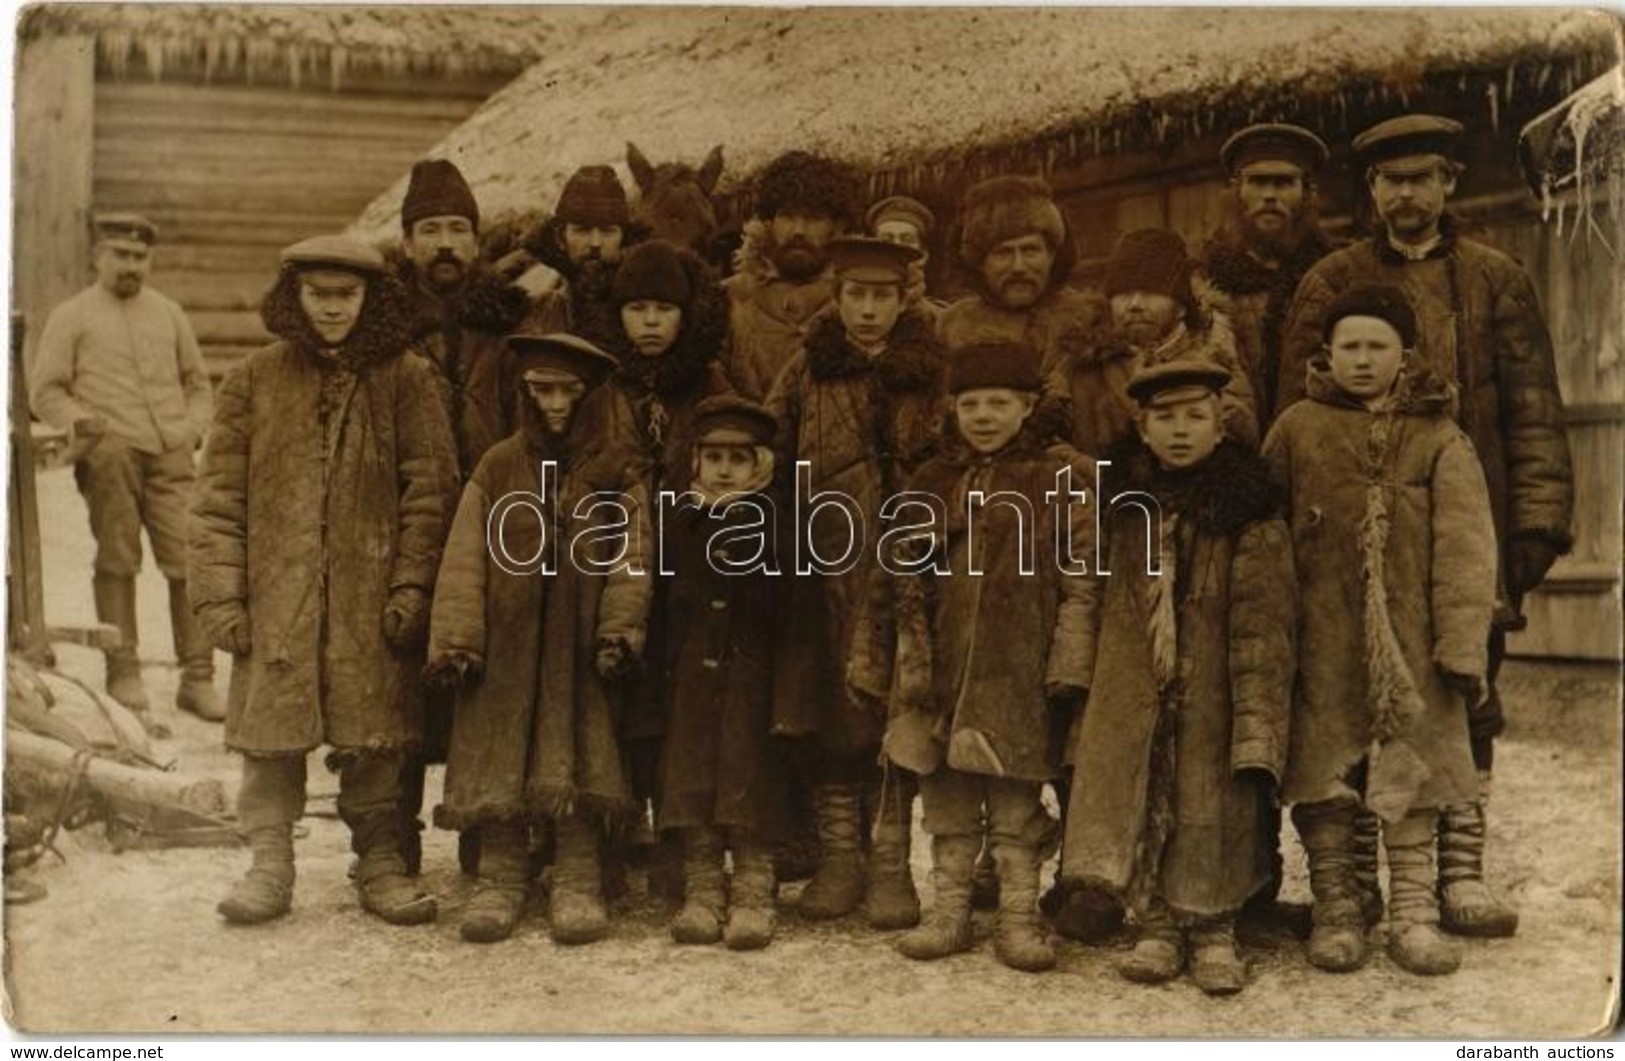 * T2/T3 1916 Oroszország. 'Az Otthon Maradottak' / WWI Austro-Hungarian K.u.K. Military, Russians Who Stayed Home. Photo - Ohne Zuordnung